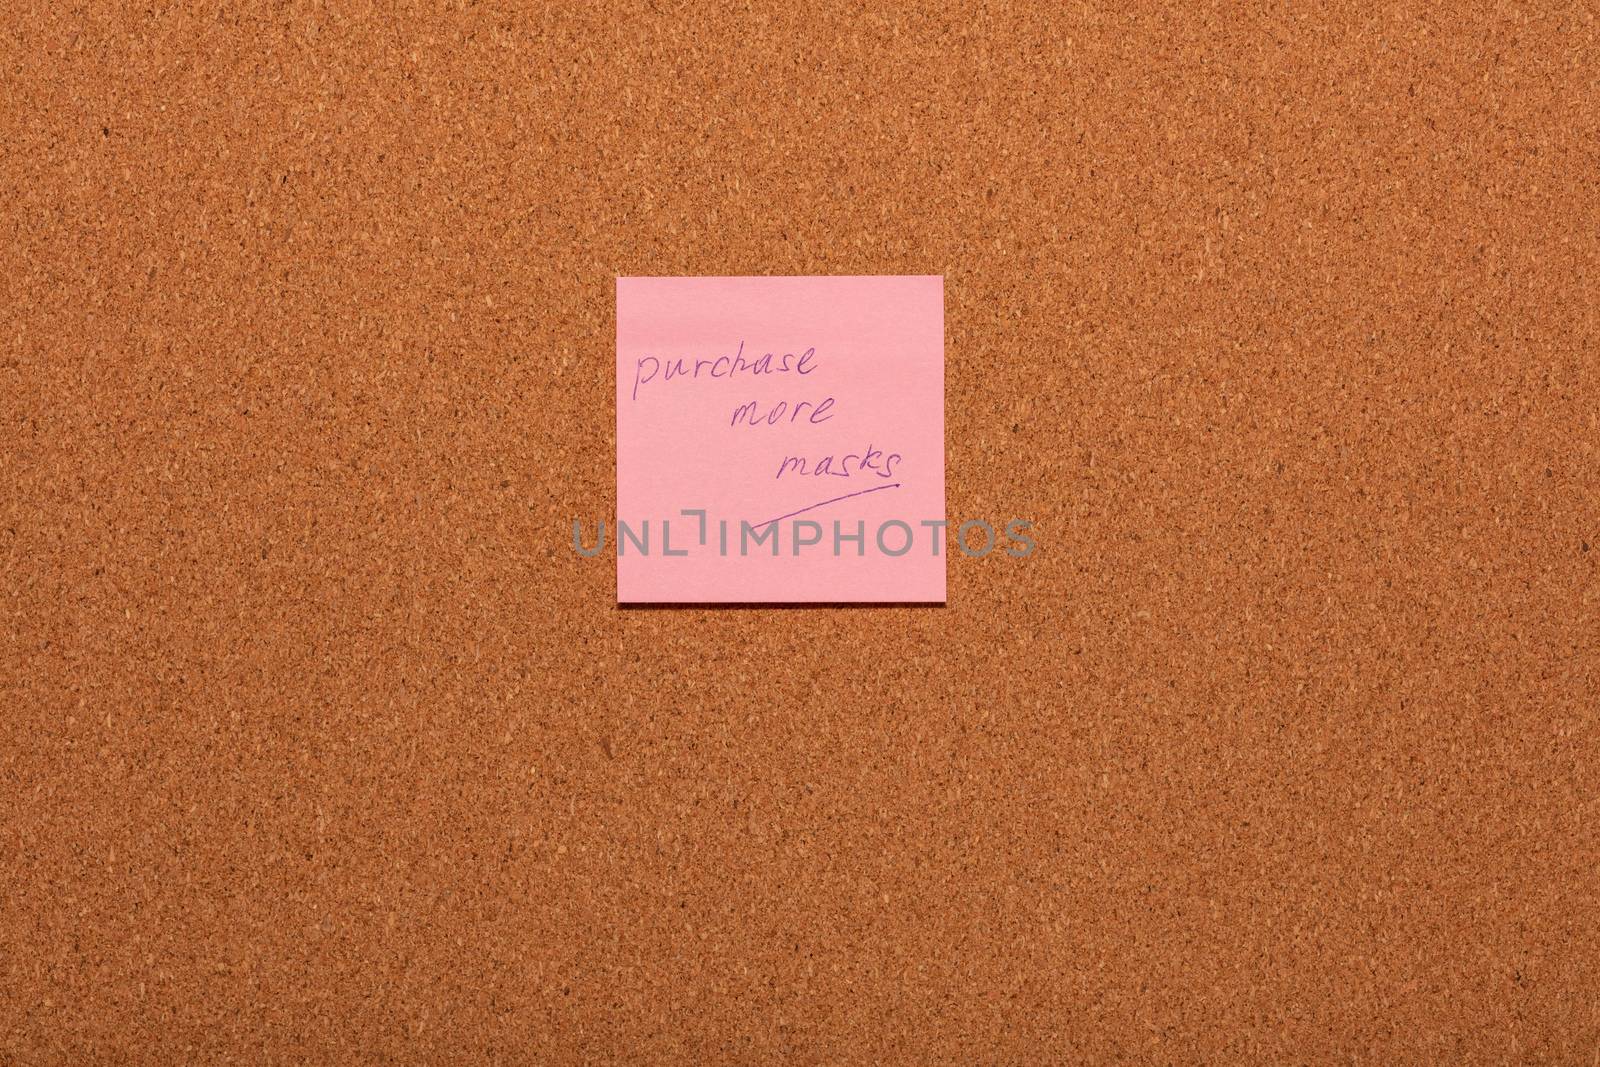 Reminder Purchase more masks handwritten on a pink sticker on a cork notice-board. by DamantisZ